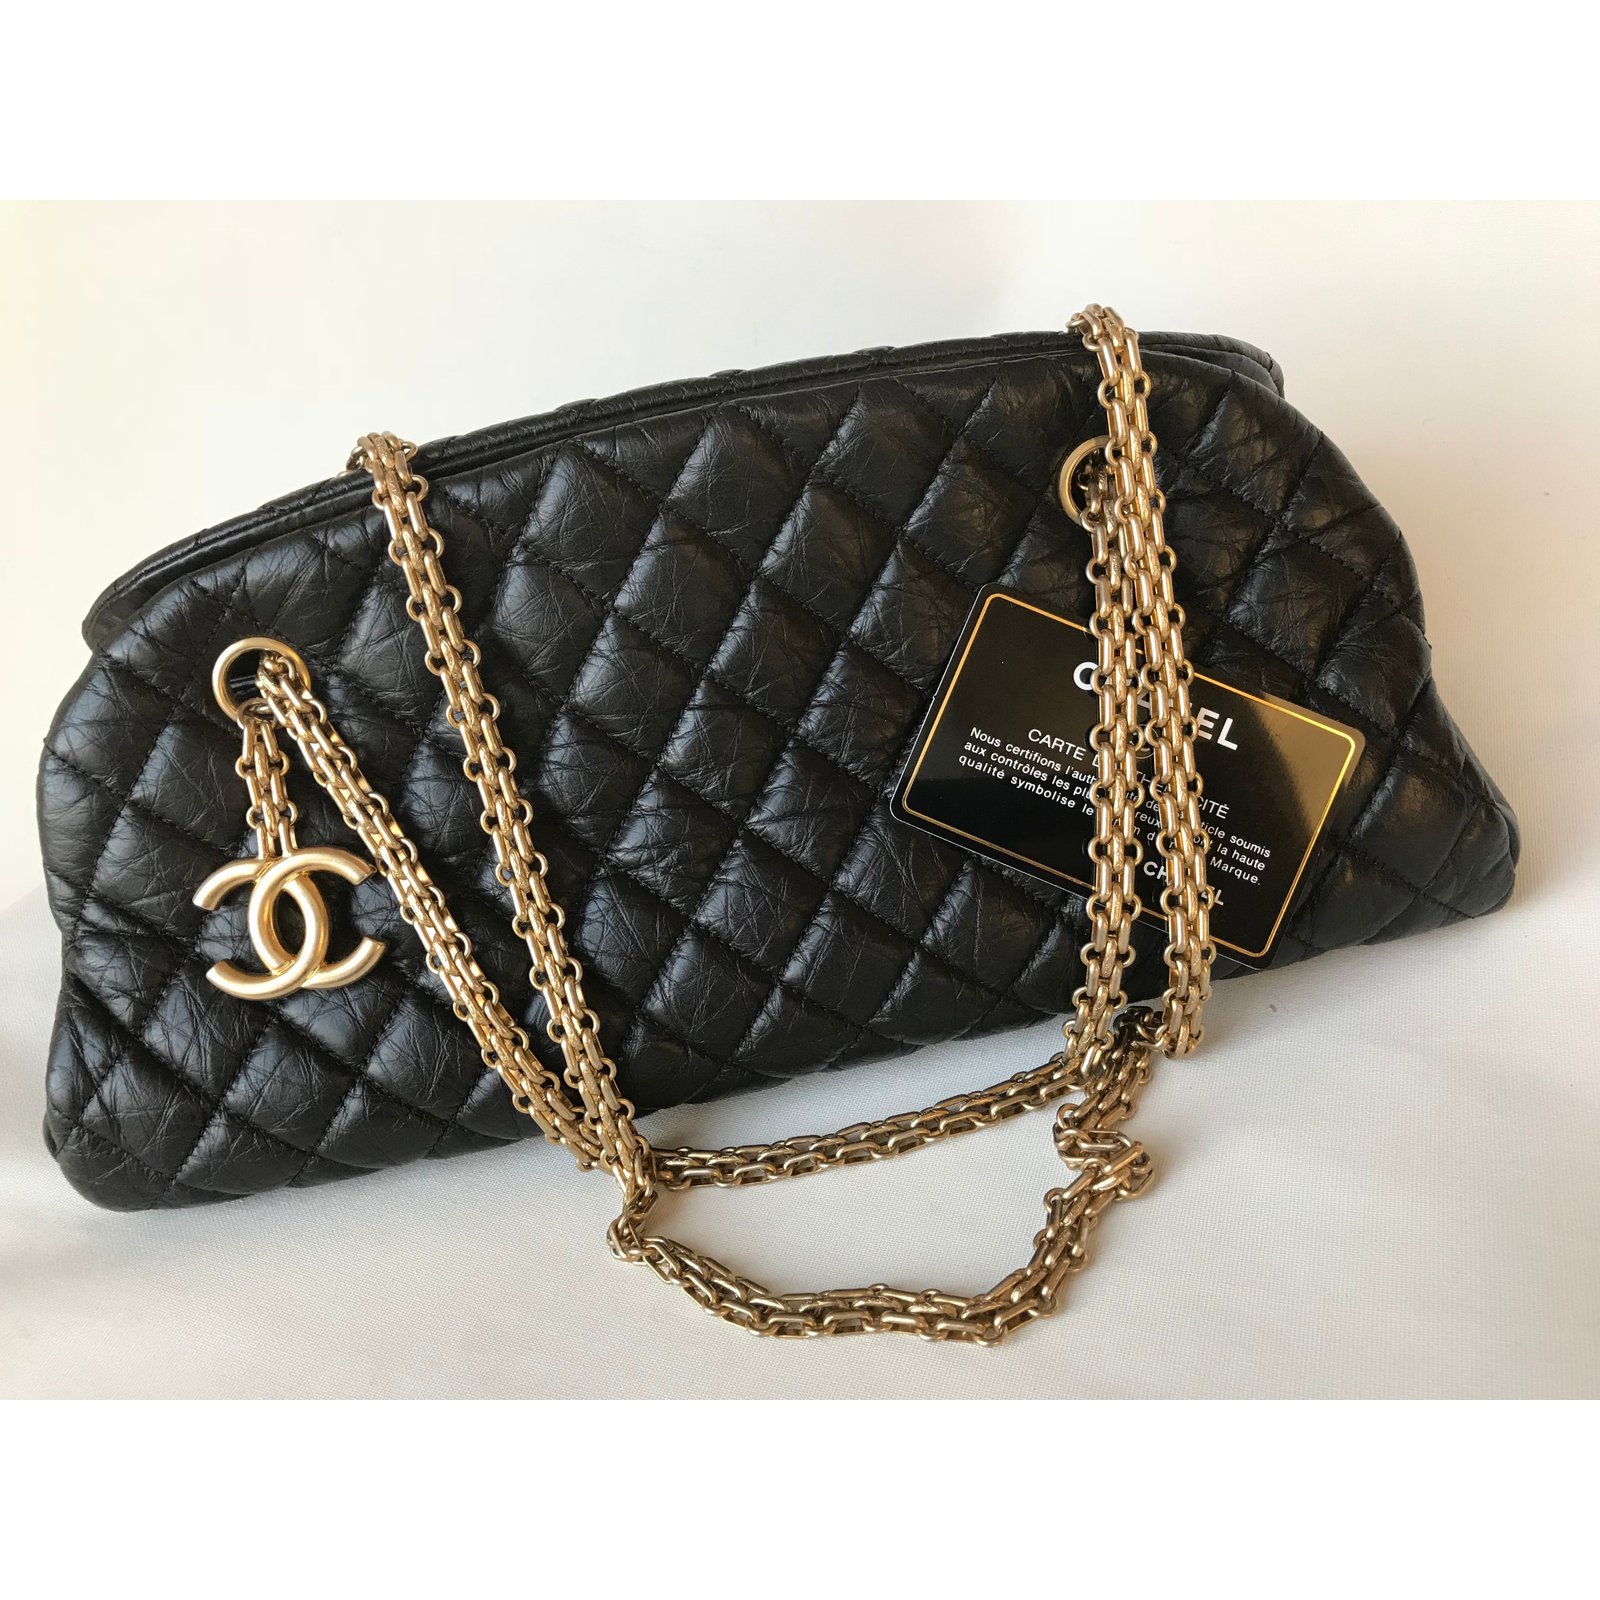 Chanel Mademoiselle Handbag 377284